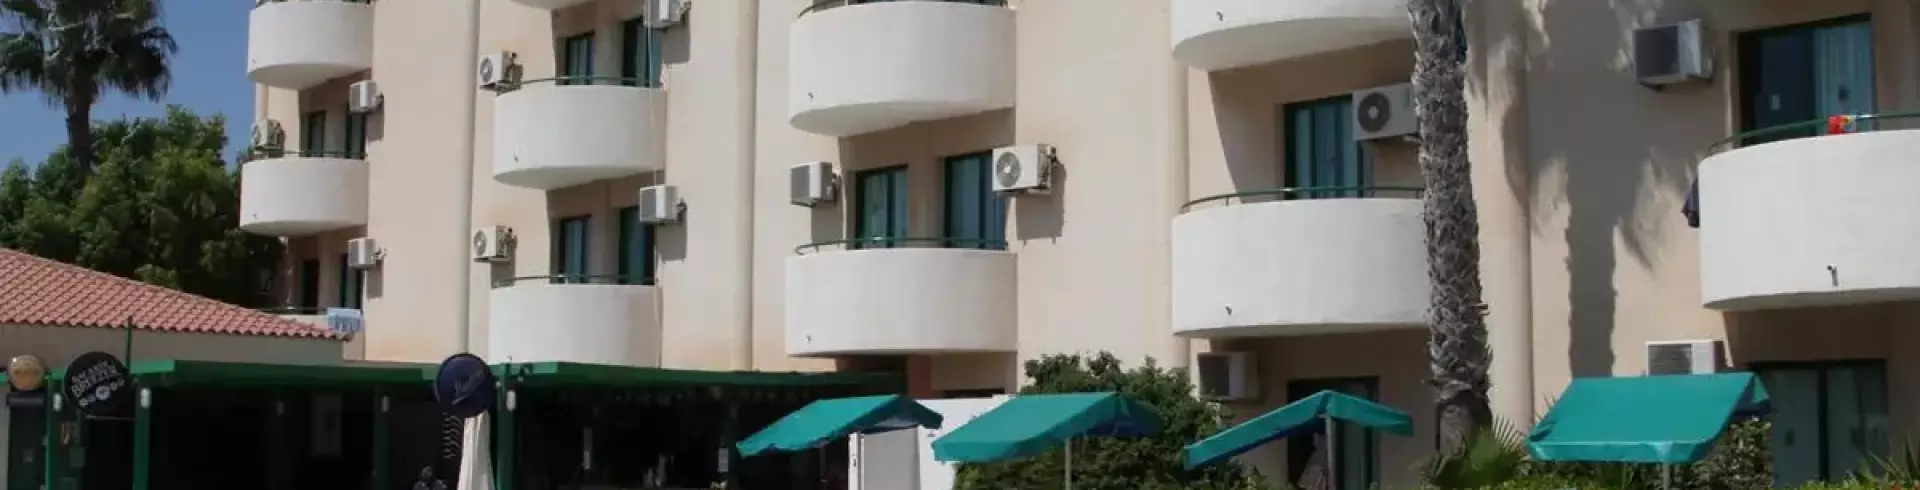 Mandalena Hotel Apartments